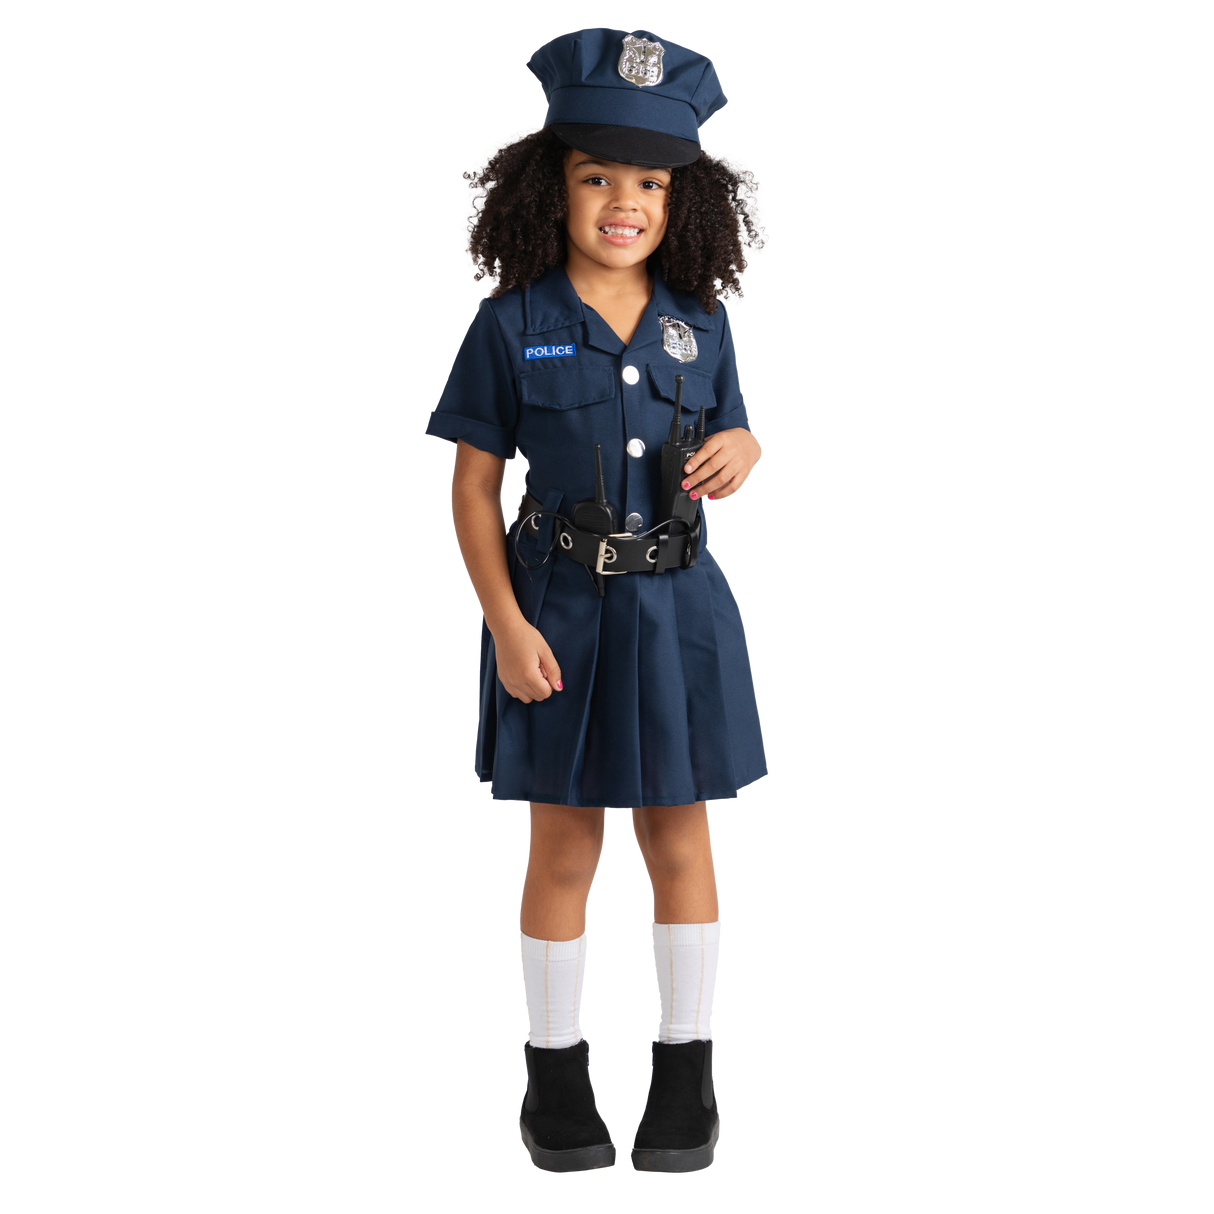 Police Officer Costume - Kids